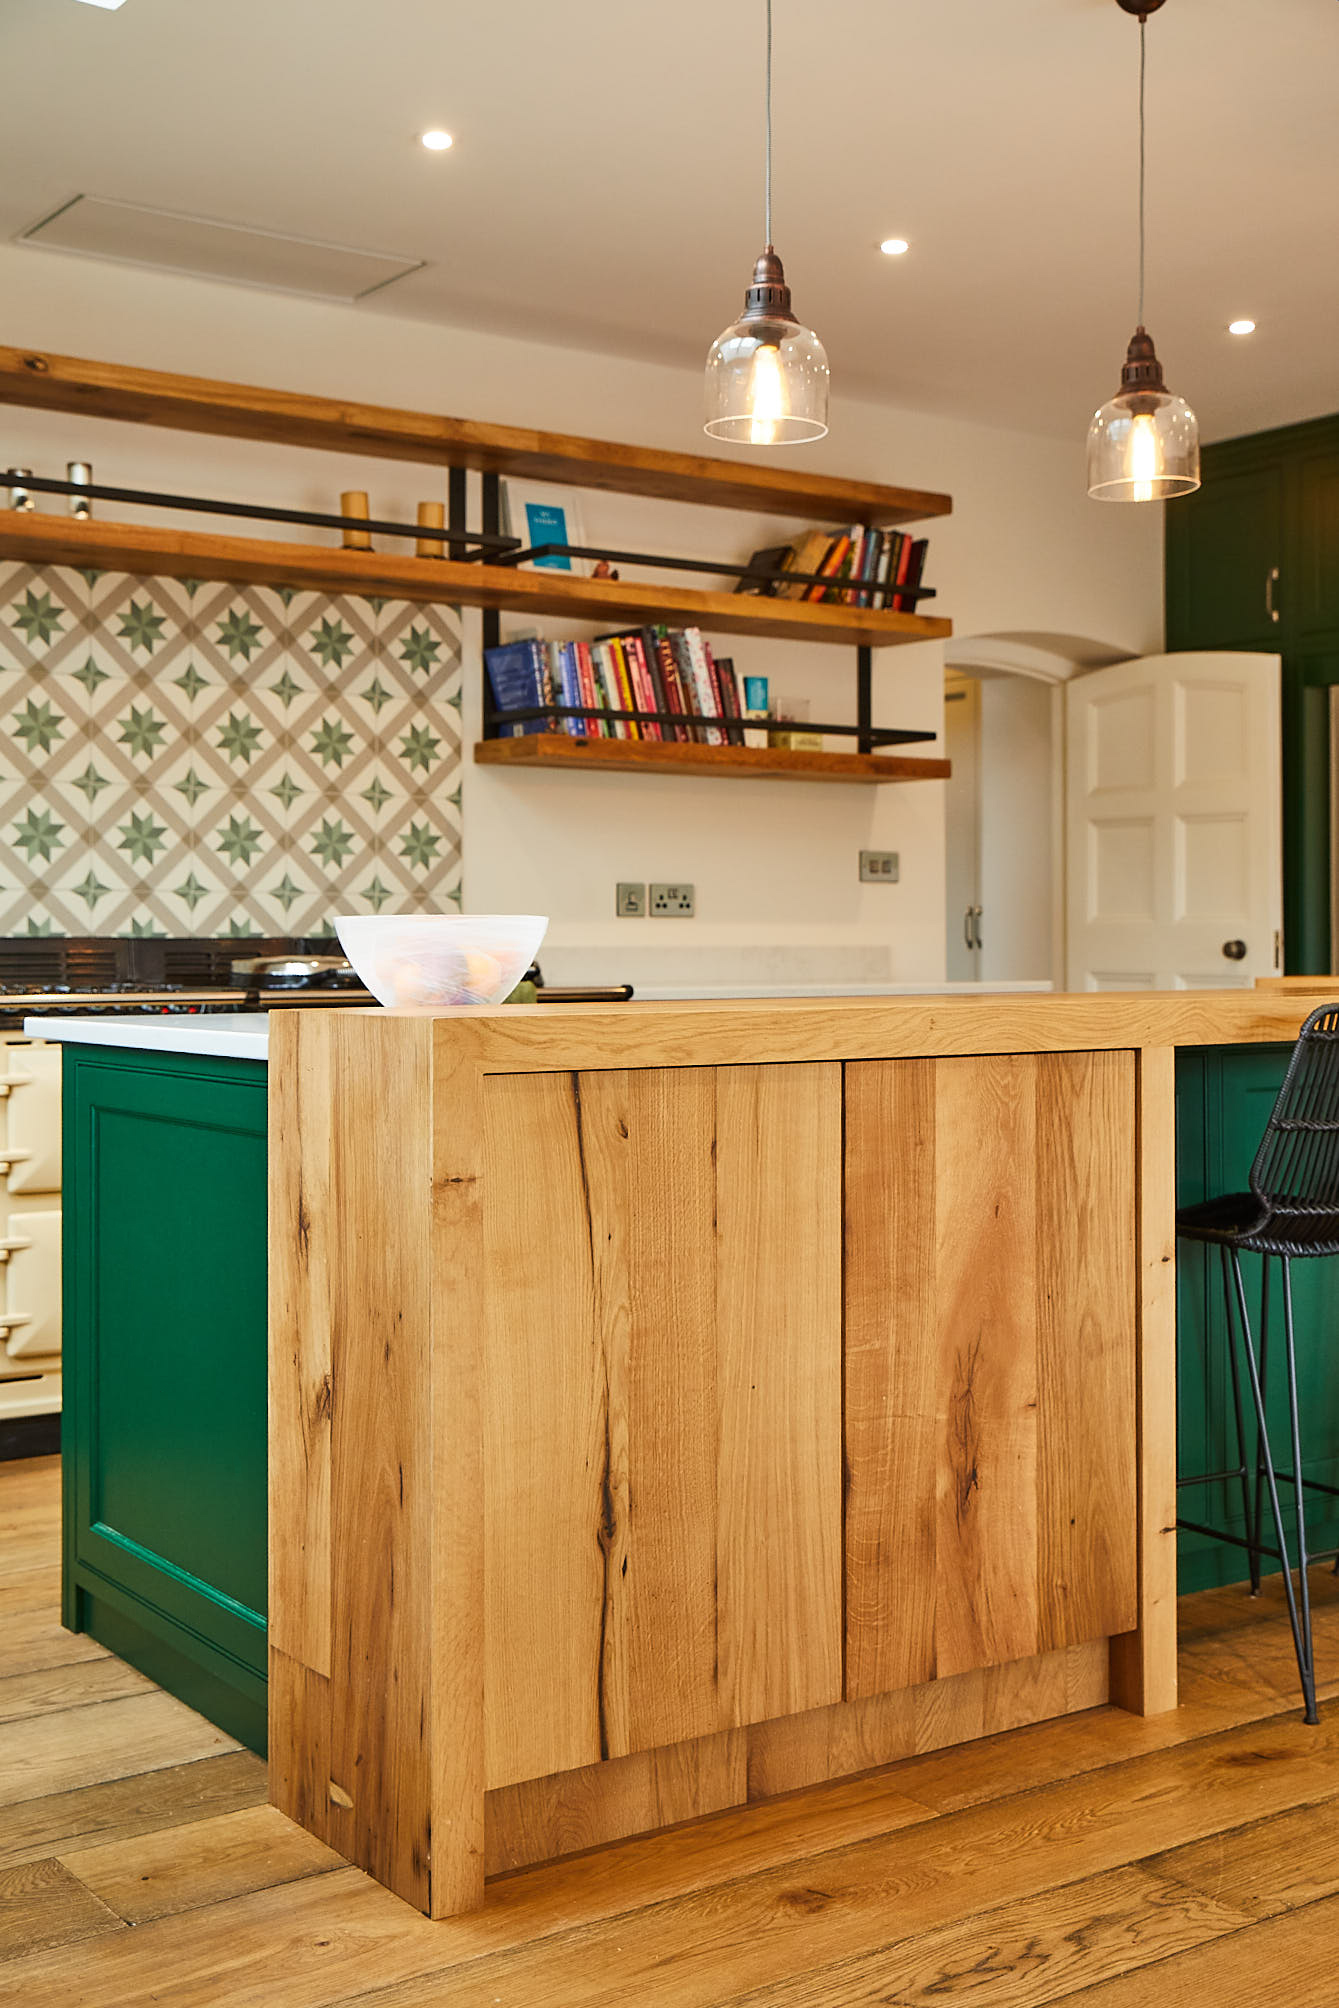 Clean oak wrap around breakfast bar with green kitchen cabinets